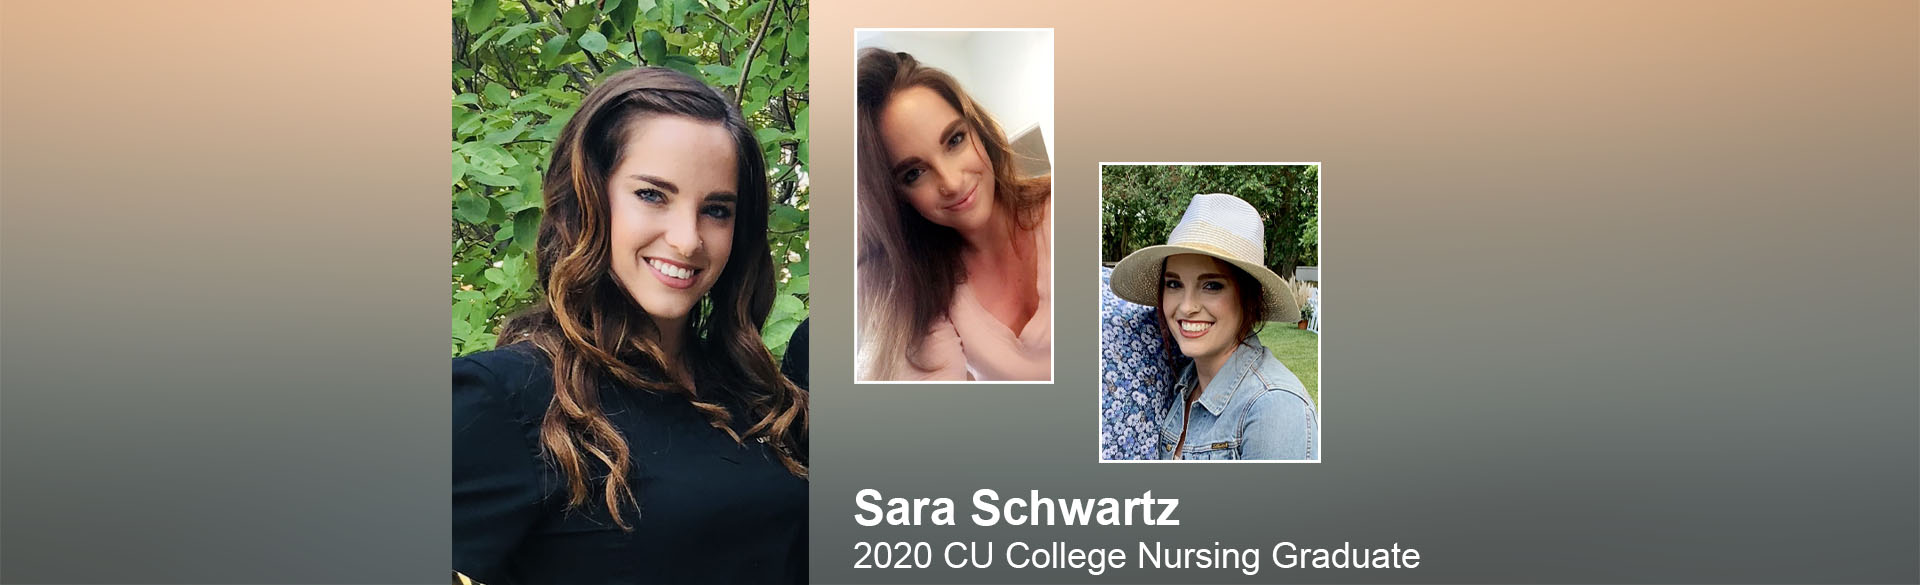 Sara Schwartz - 2020 CU College Nursing Graduate